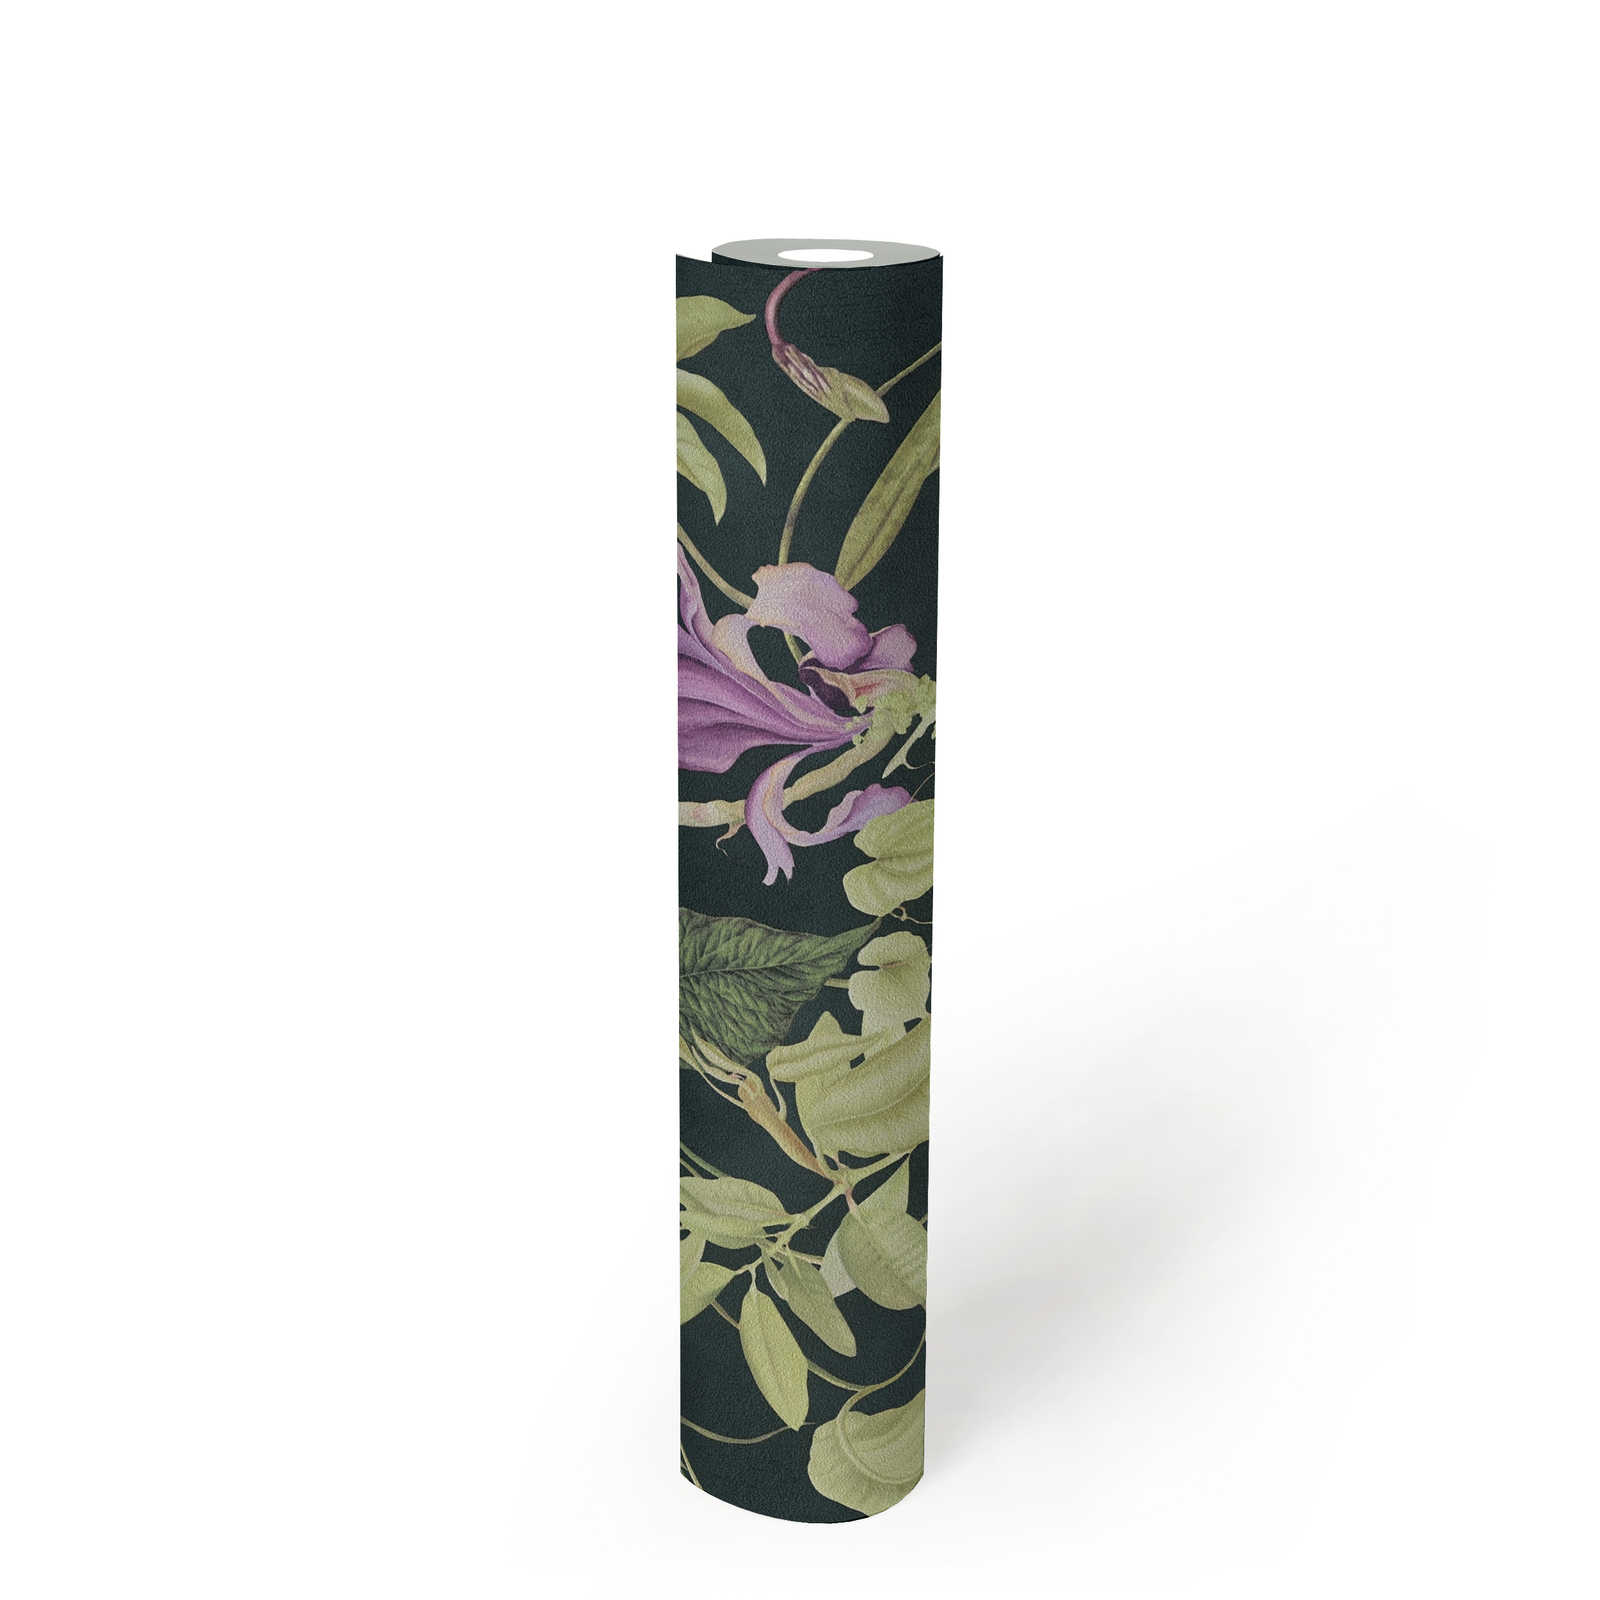             Carta da parati floreale tropicale Design by MICHALSKY - Verde, nero
        